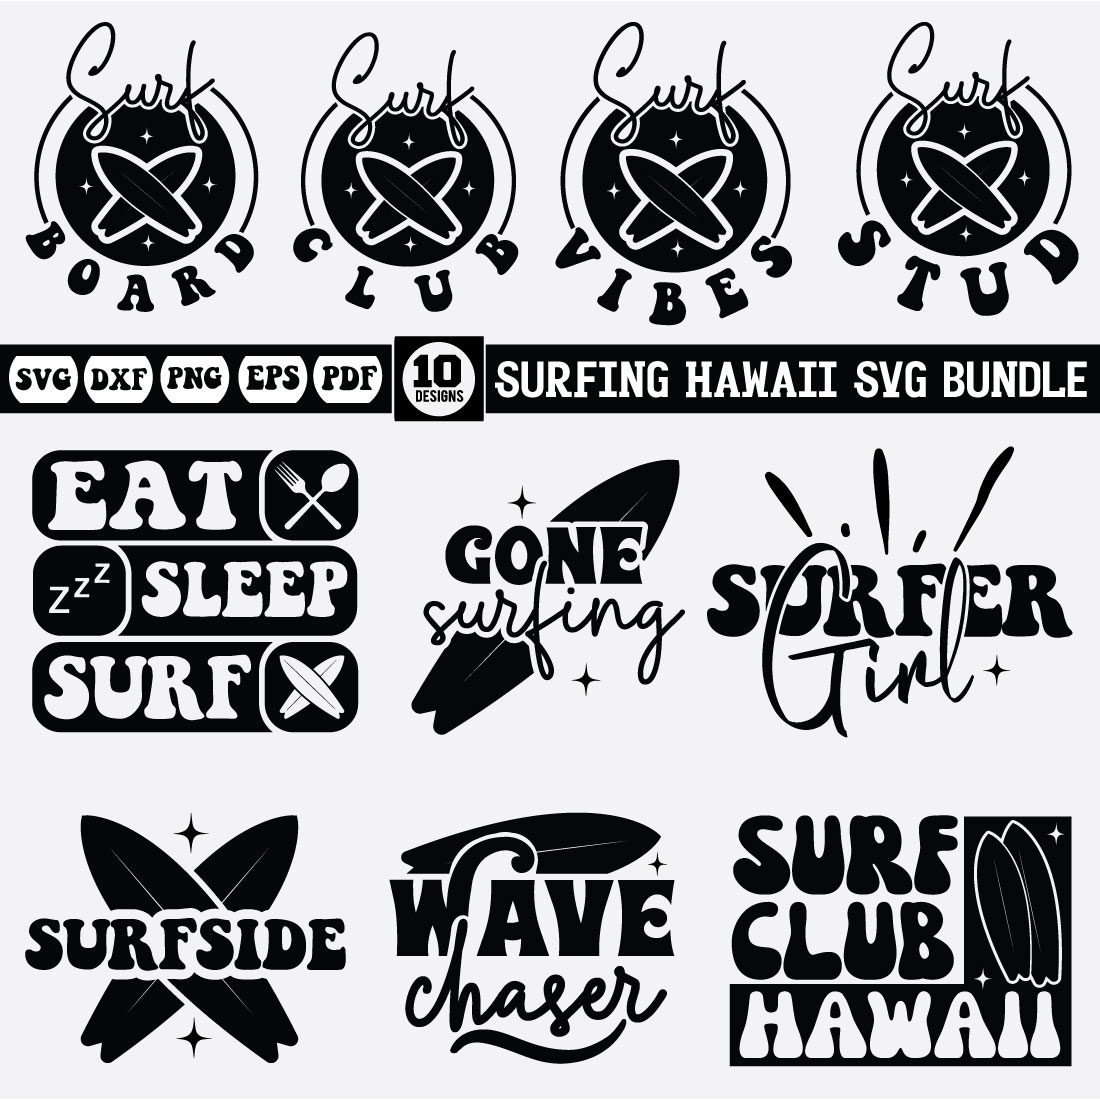 Surfing Hawaii Svg bundle cover image.